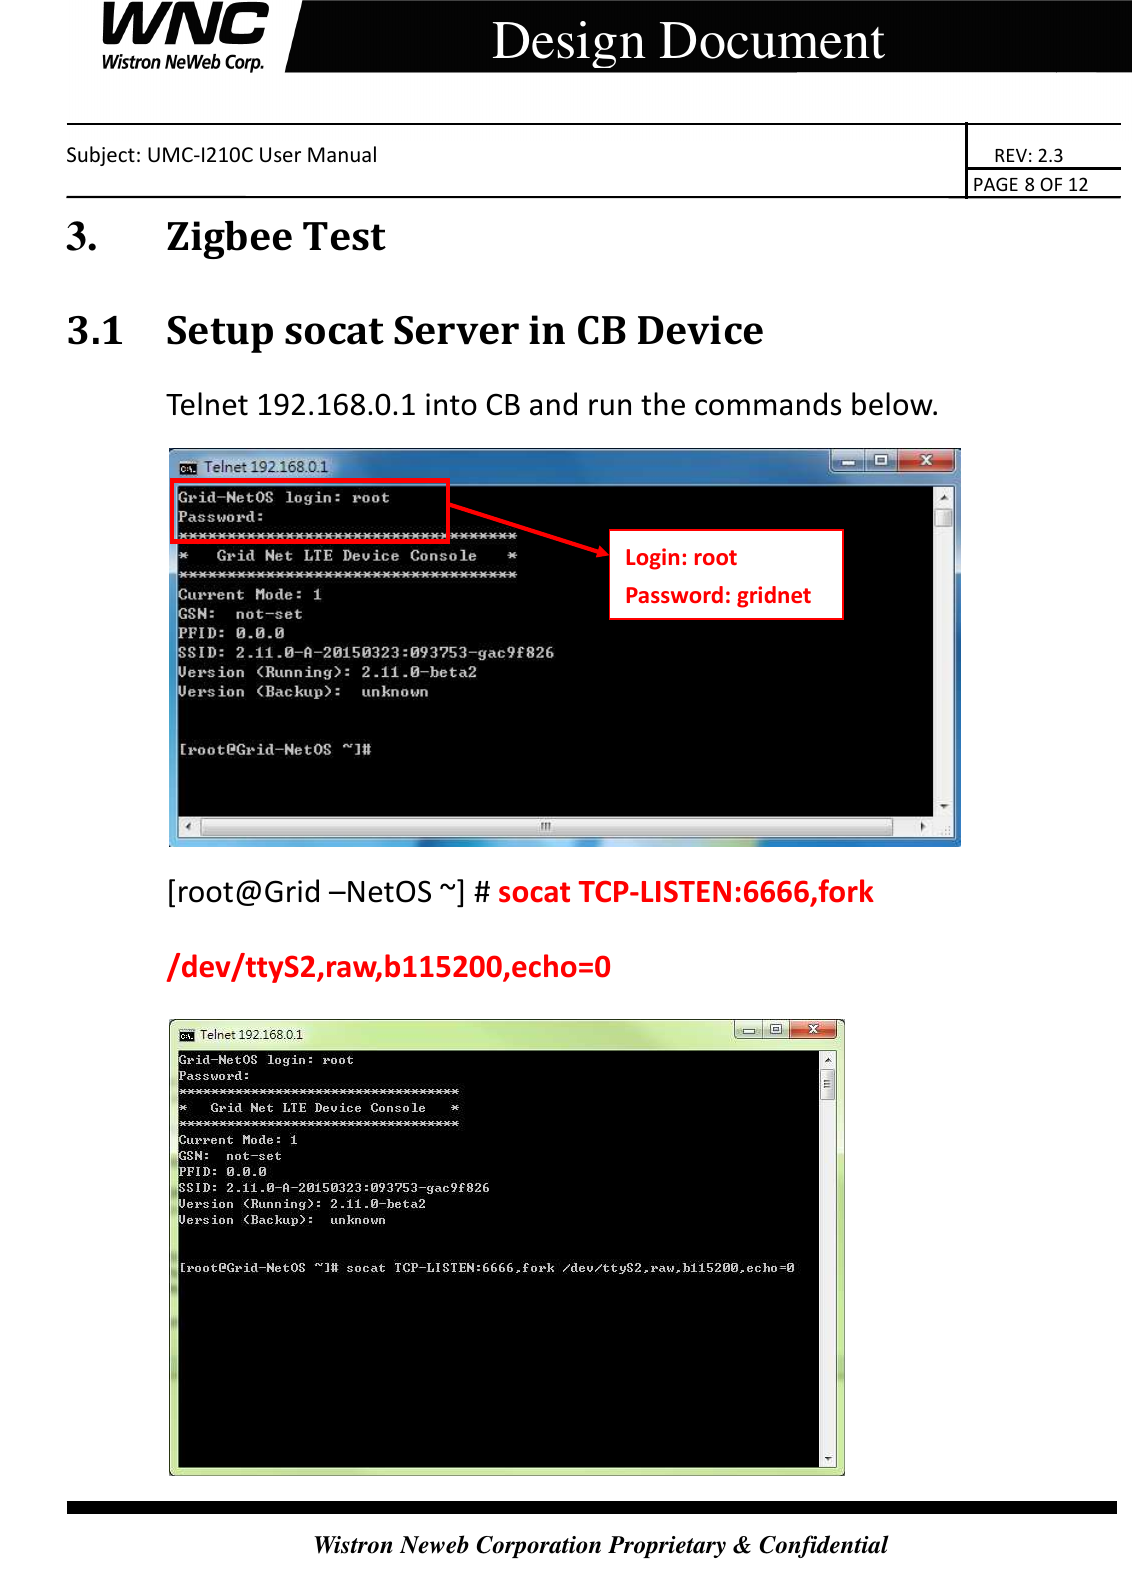    Subject: UMC-I210C User Manual                                                                       REV: 2.3                                                                                                                                                                               PAGE 8 OF 12  Wistron Neweb Corporation Proprietary &amp; Confidential     Design Document 3.       Zigbee Test 3.1 Setup socat Server in CB Device Telnet 192.168.0.1 into CB and run the commands below.  [root@Grid –NetOS ~] # socat TCP-LISTEN:6666,fork /dev/ttyS2,raw,b115200,echo=0  Login: root Password: gridnet 